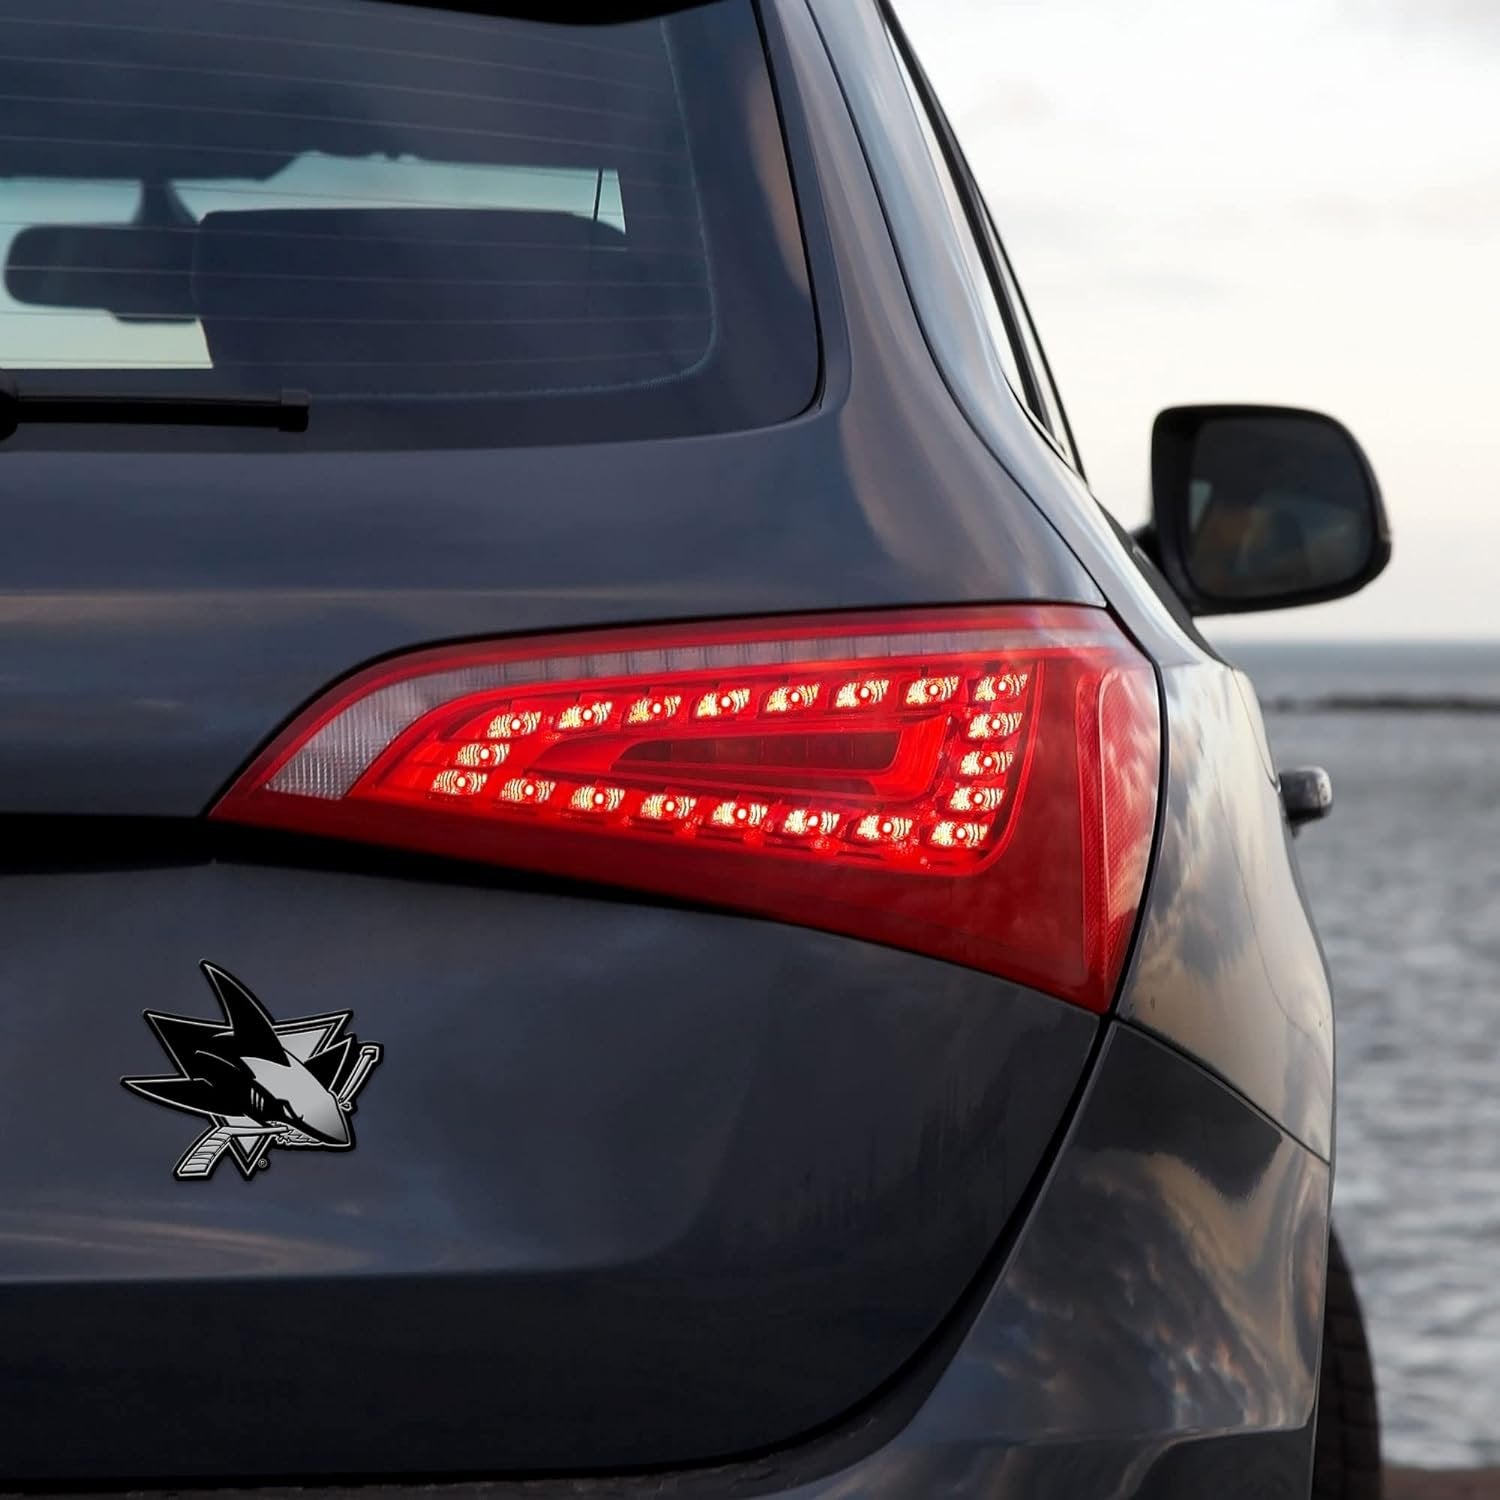 San Jose Sharks Auto Emblem, Silver Chrome Color, Raised Molded Plastic, 3.5 Inch, Adhesive Tape Backing